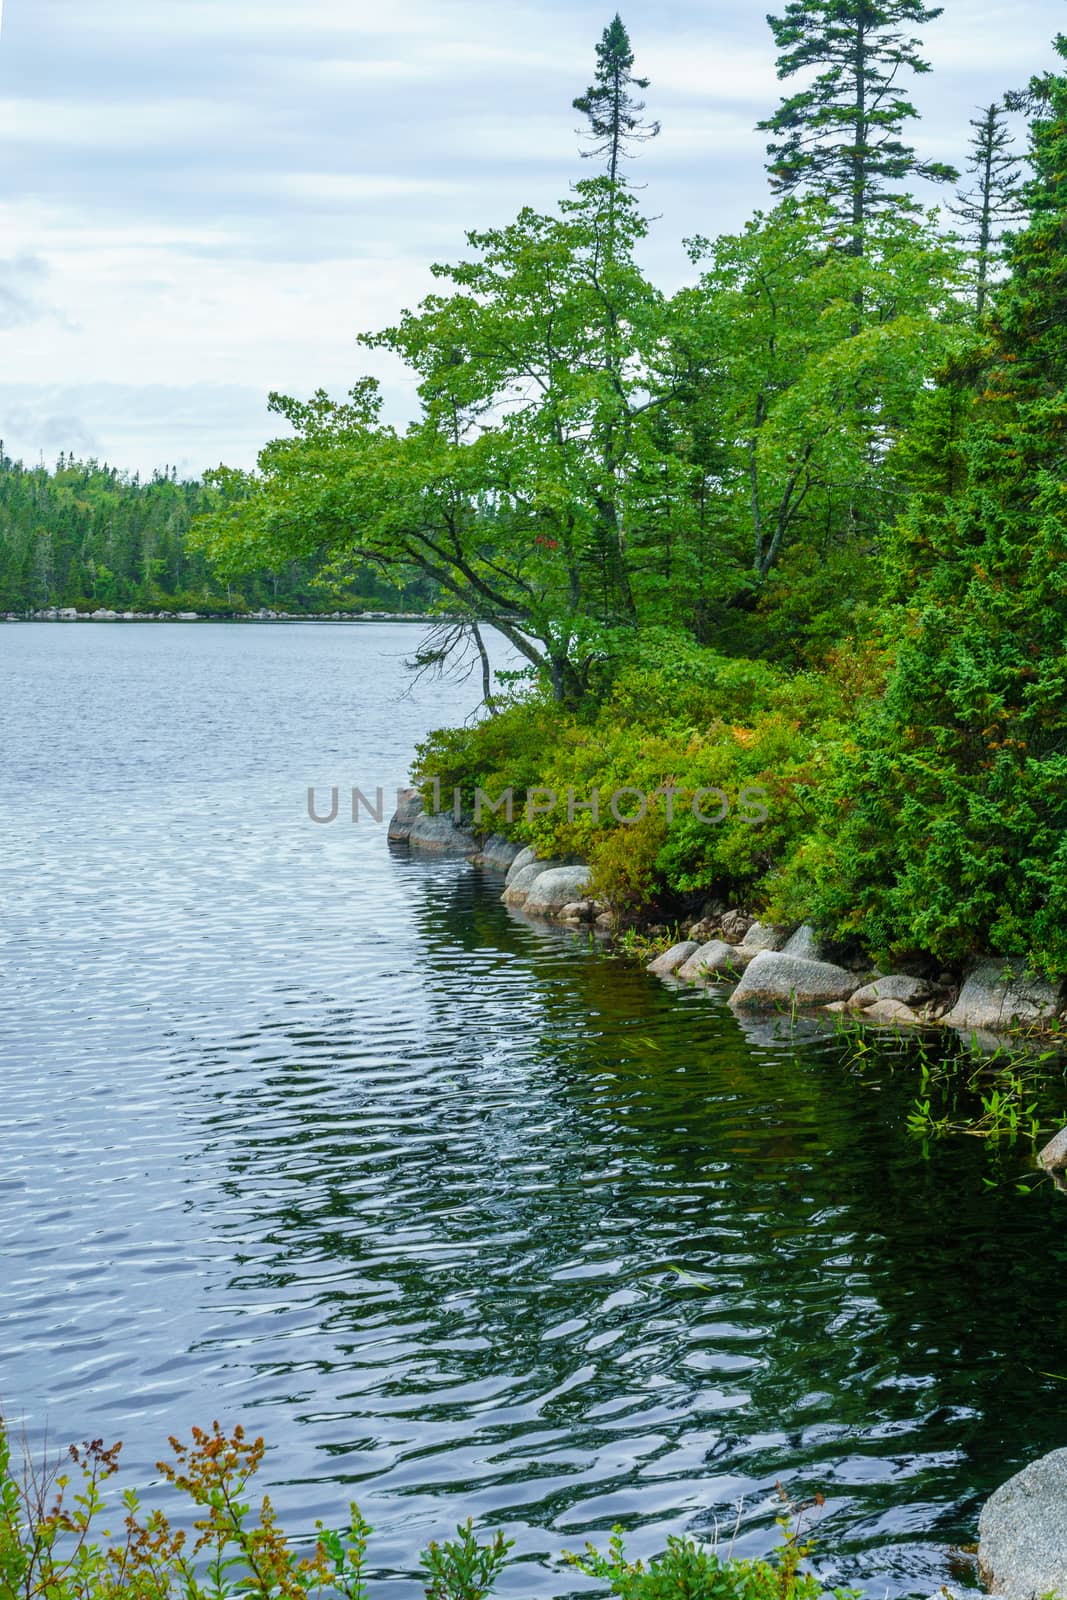 Awalt Lake, in Nova Scotia by RnDmS